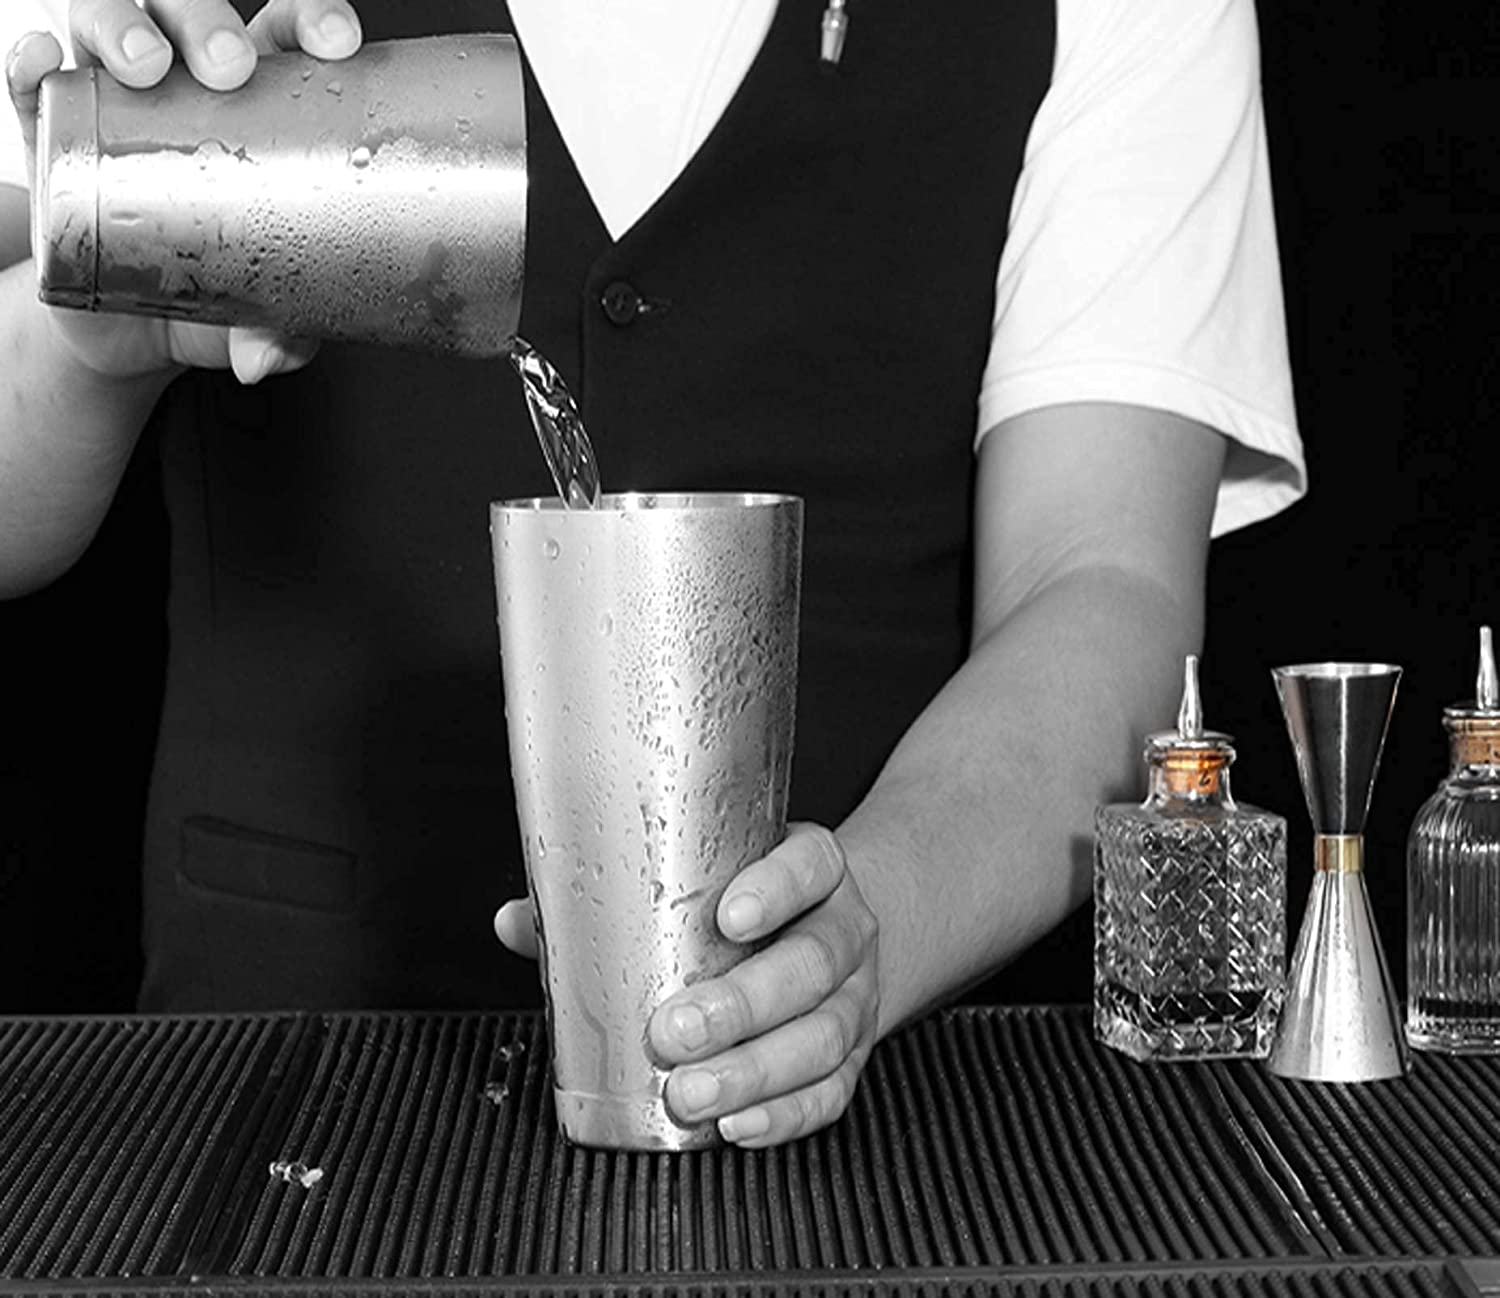 NJ Boston Cocktail Shaker, Cocktail Shaker Boston Mixing Tin Bartender Tool, Stainless Steel Shaker Bar Set for Parties, 2 Piece Boston Shaking Shaker Sets 540 ml and 900 ml - 2 Pcs Set